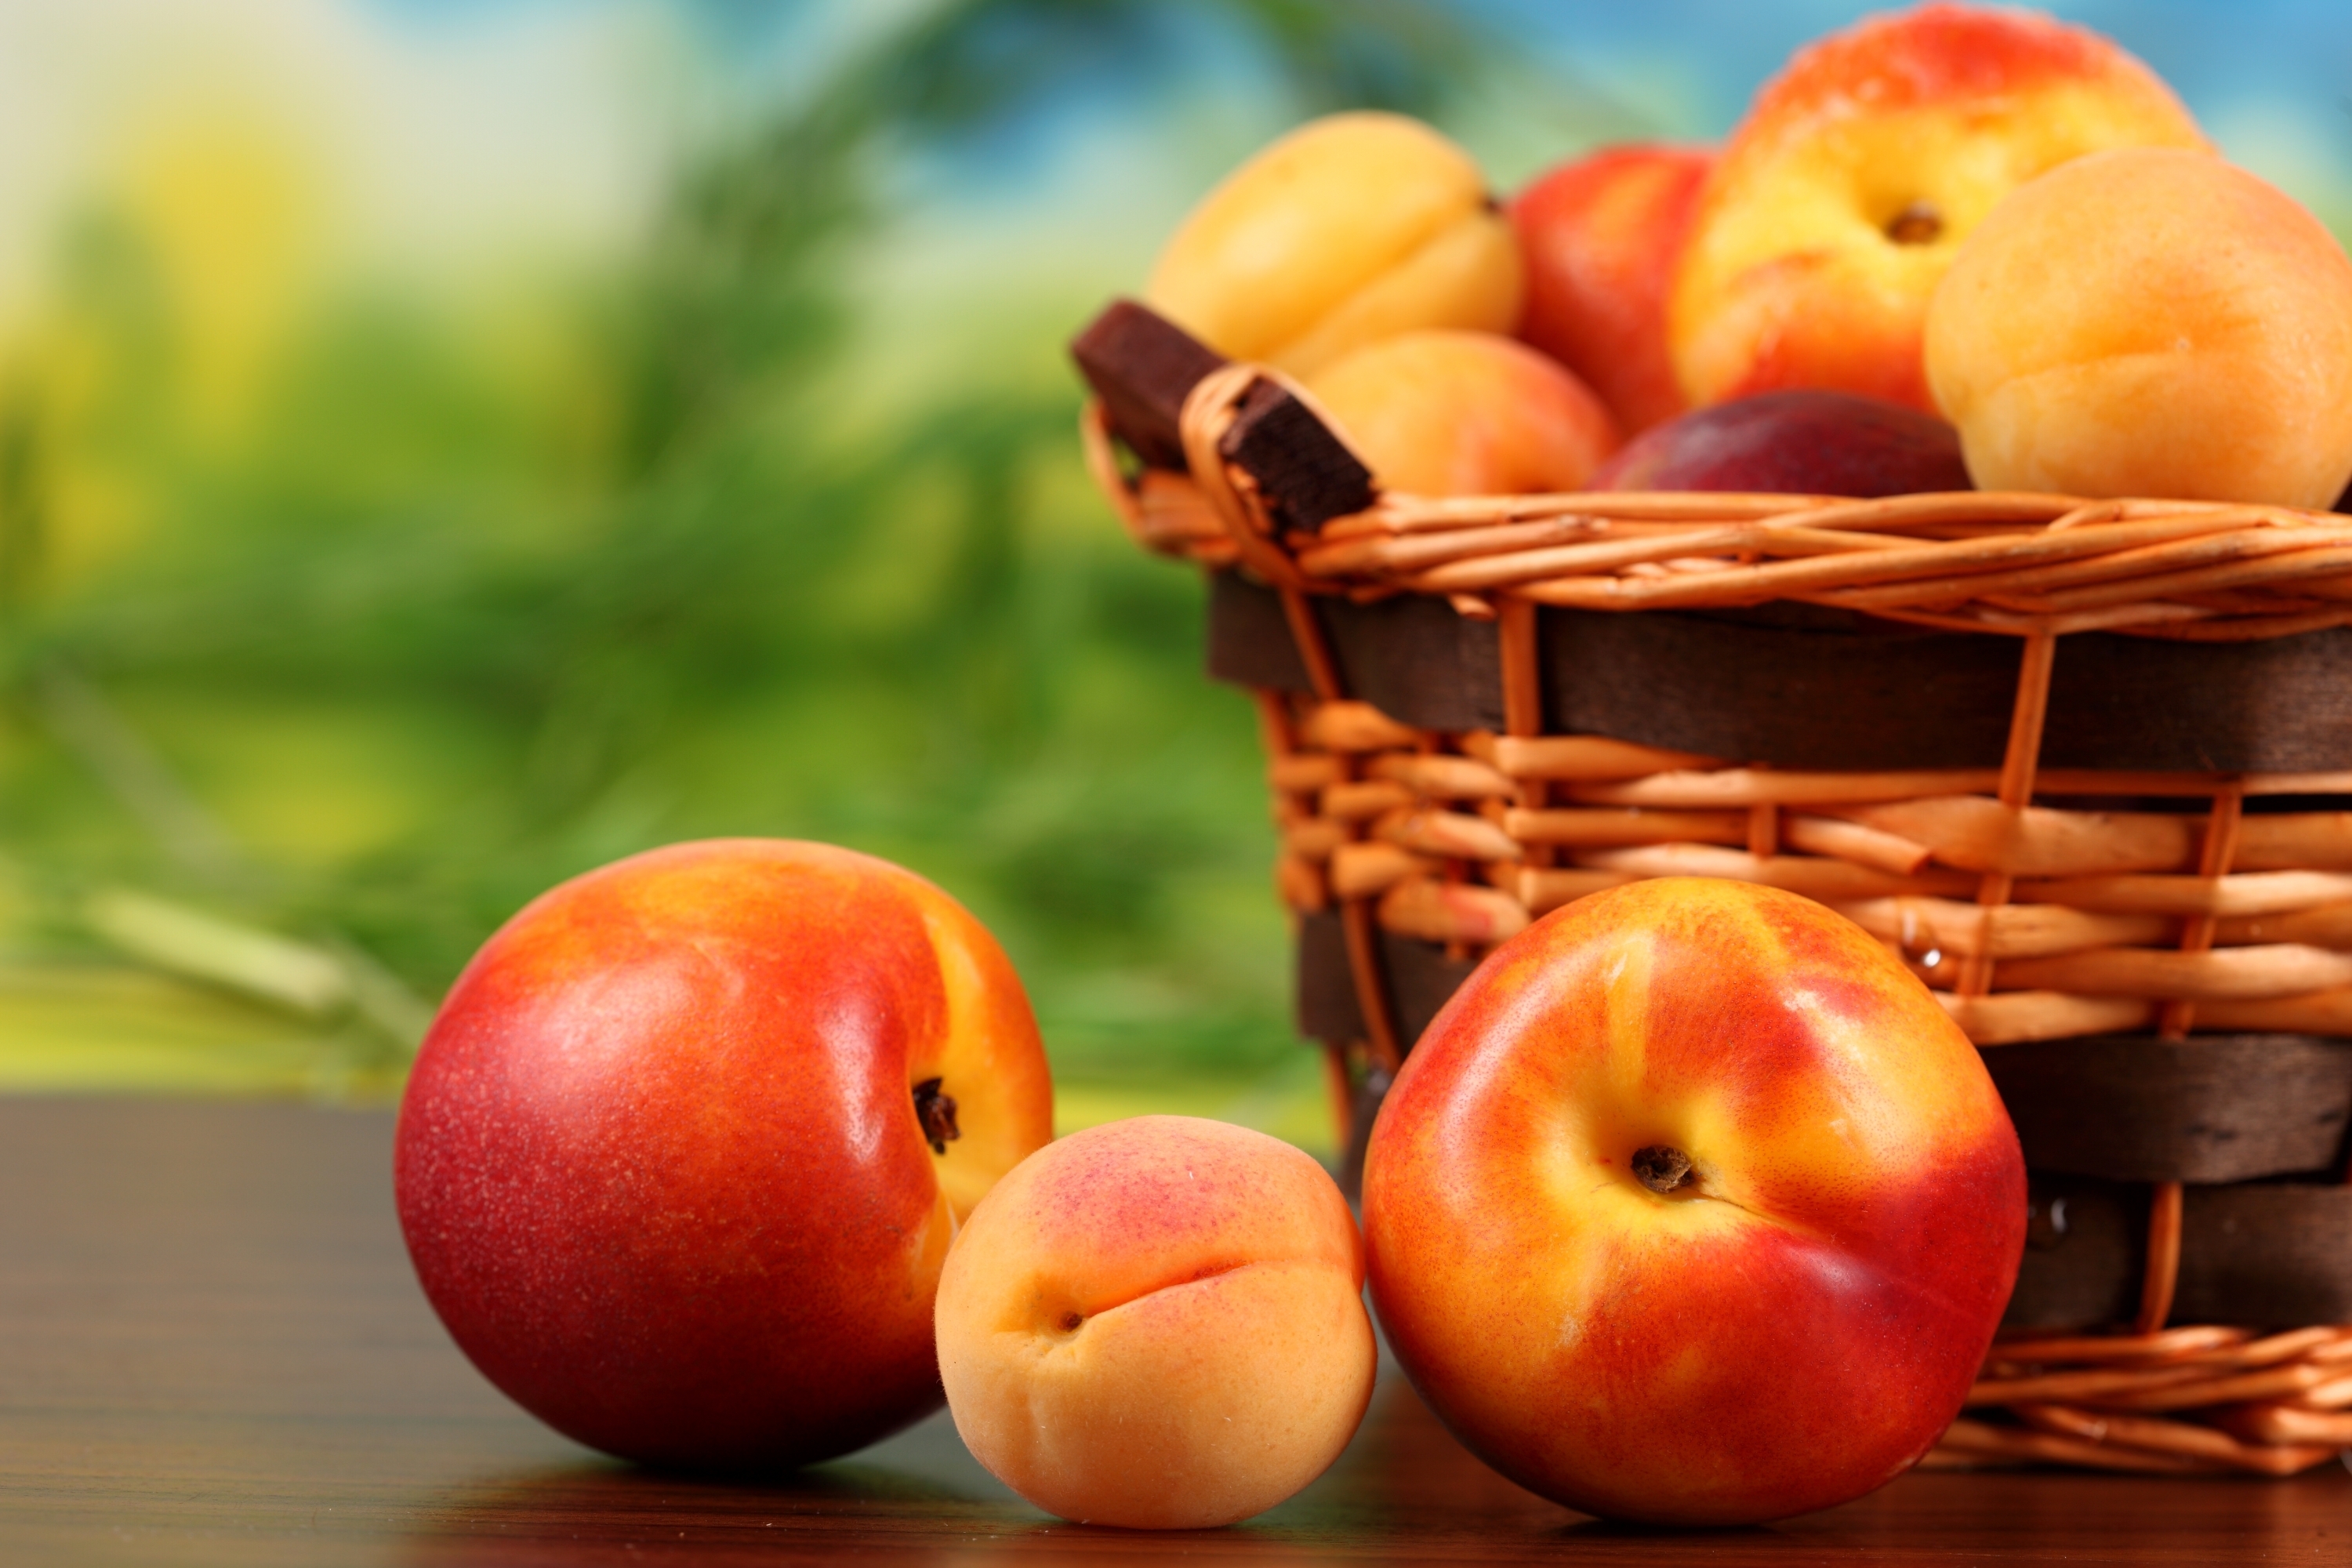 Peaches Nectarines Apricots Fruit Basket Stock Photos